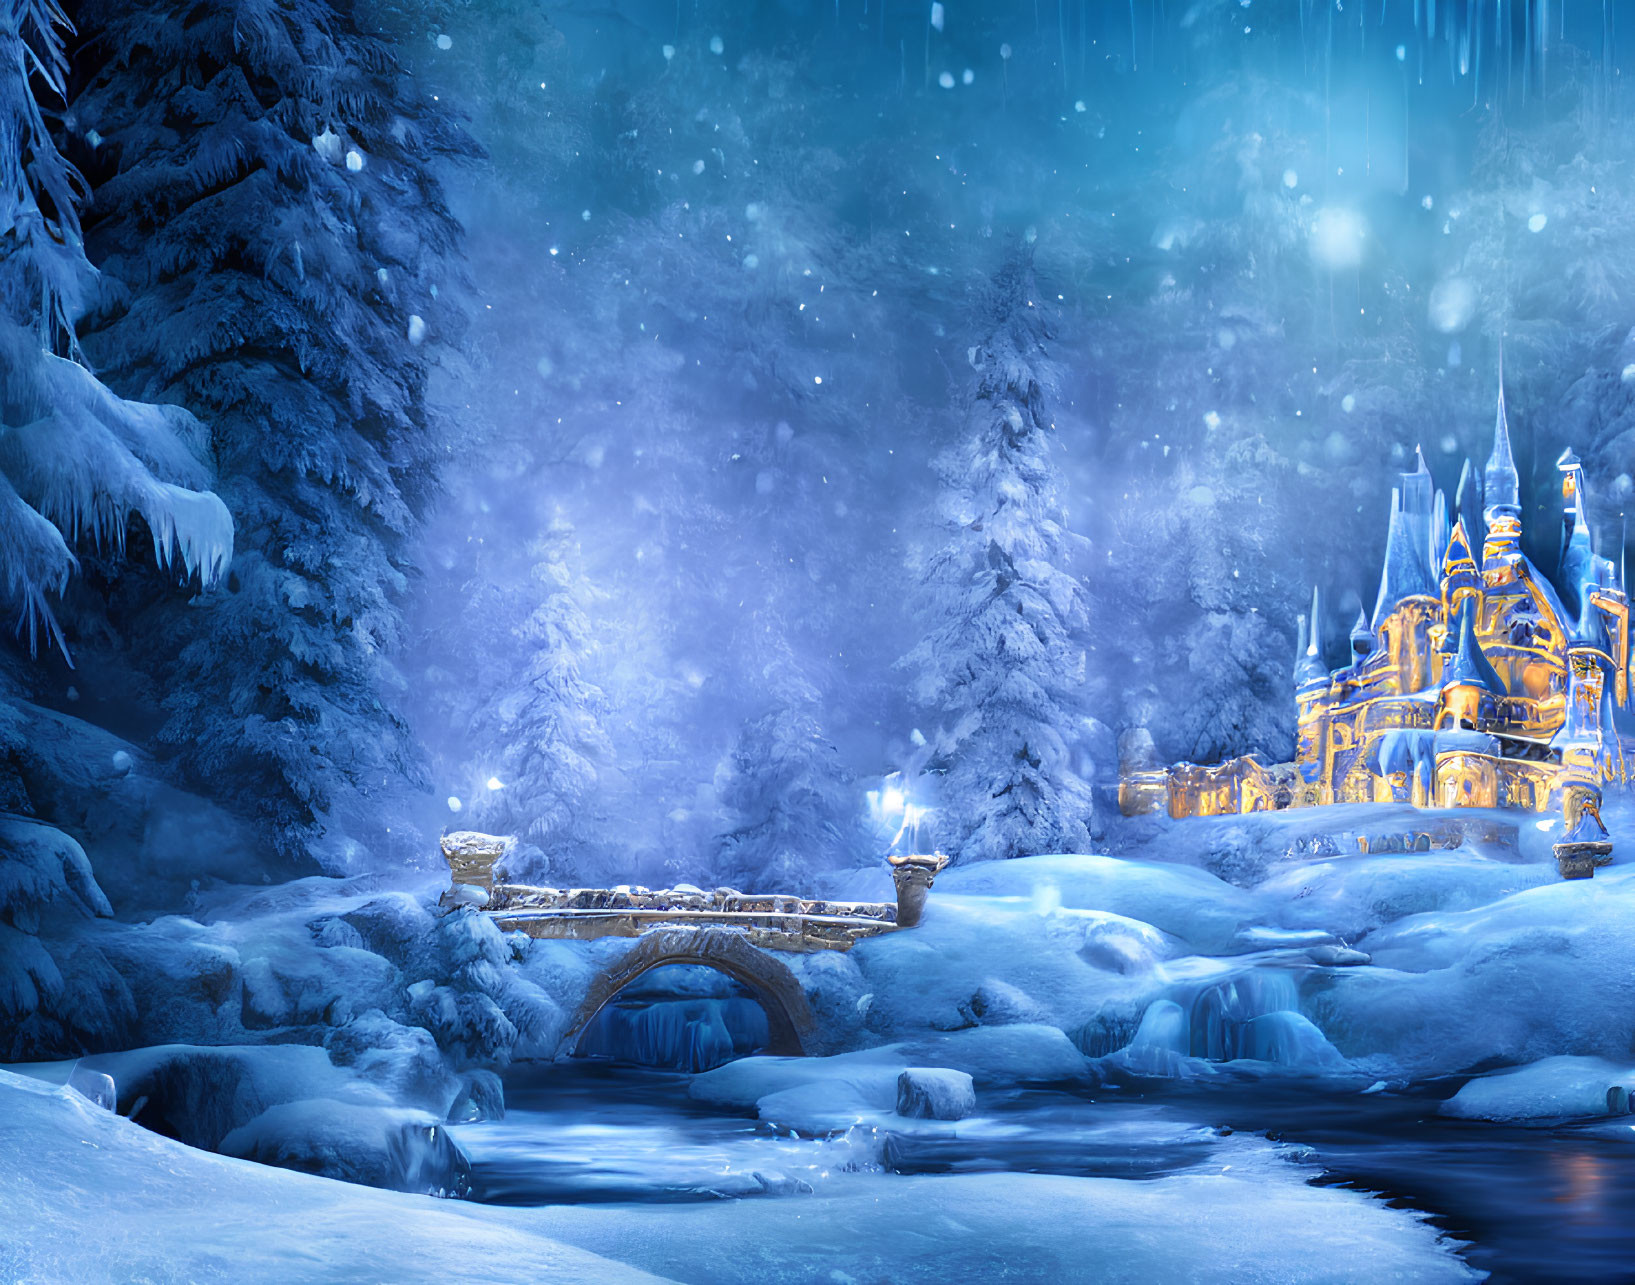 Snowy Night Fantasy Castle with Illuminated Bridge & Icy Trees